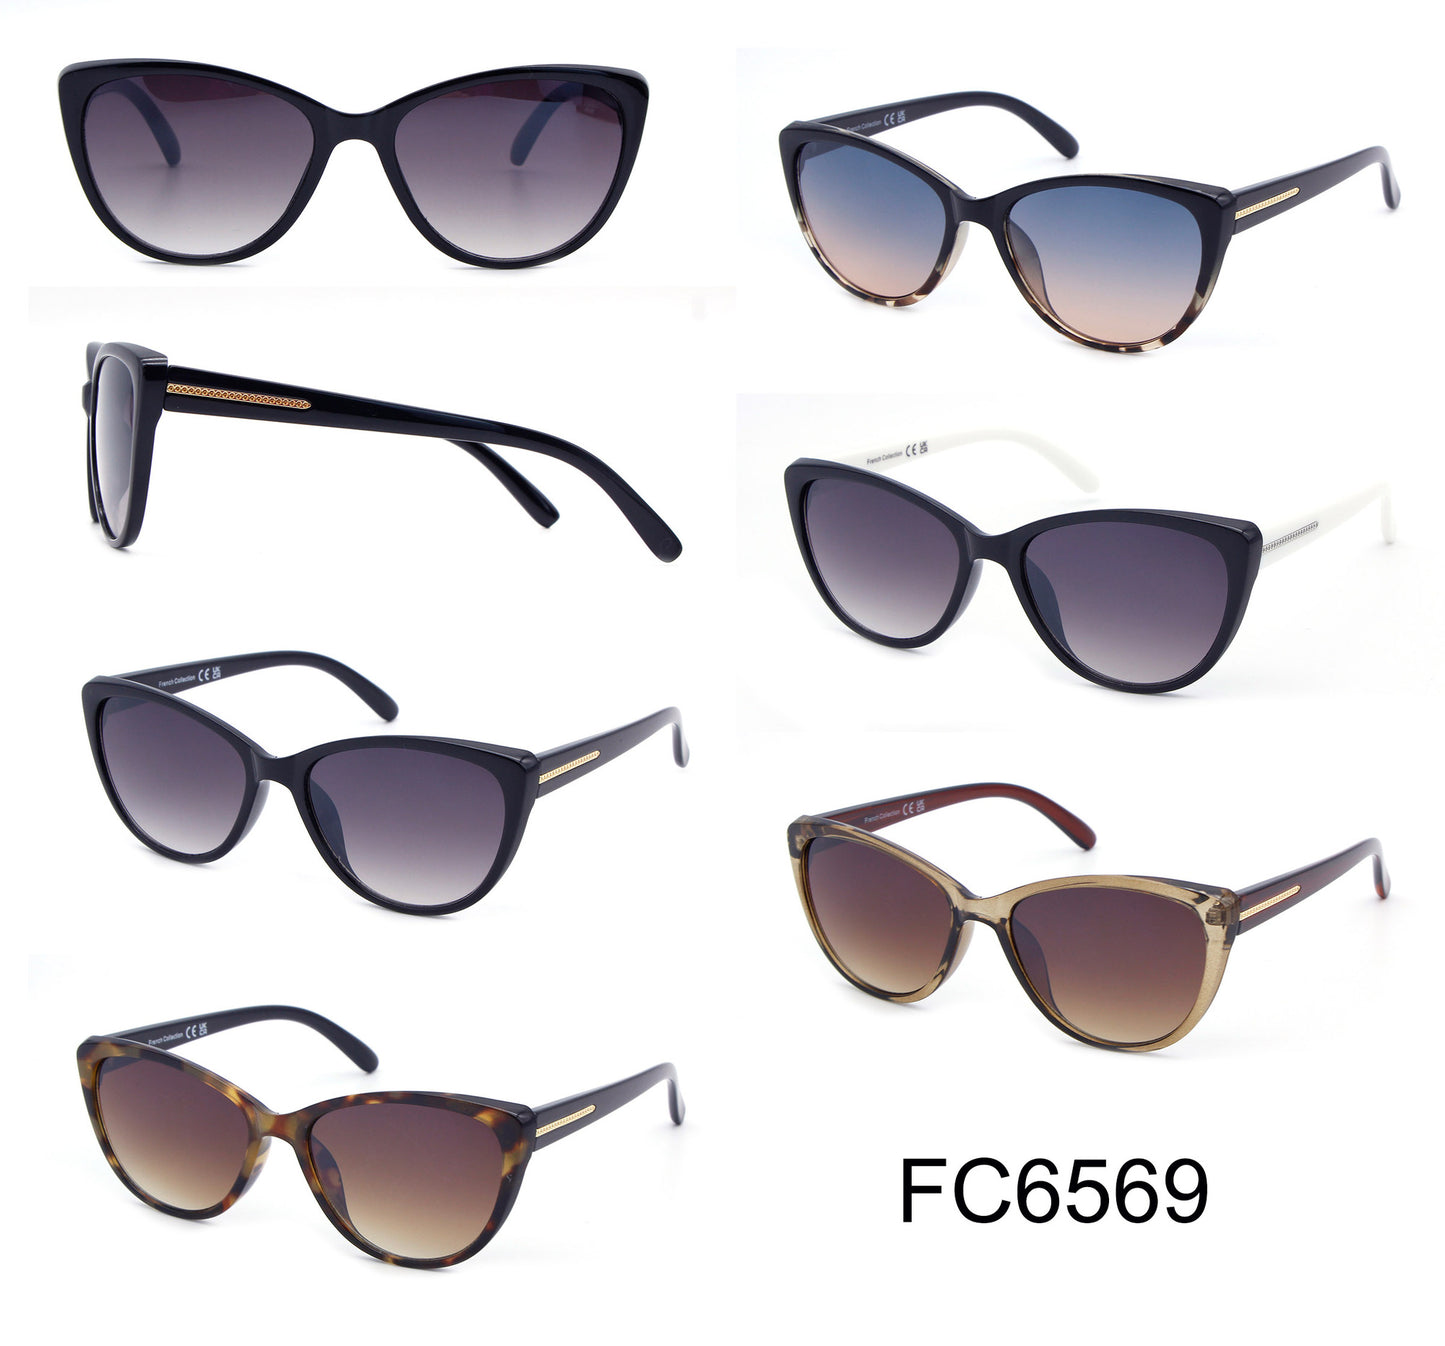 FC 6569 - Fashion Plastic Cat Eye Sunglasses